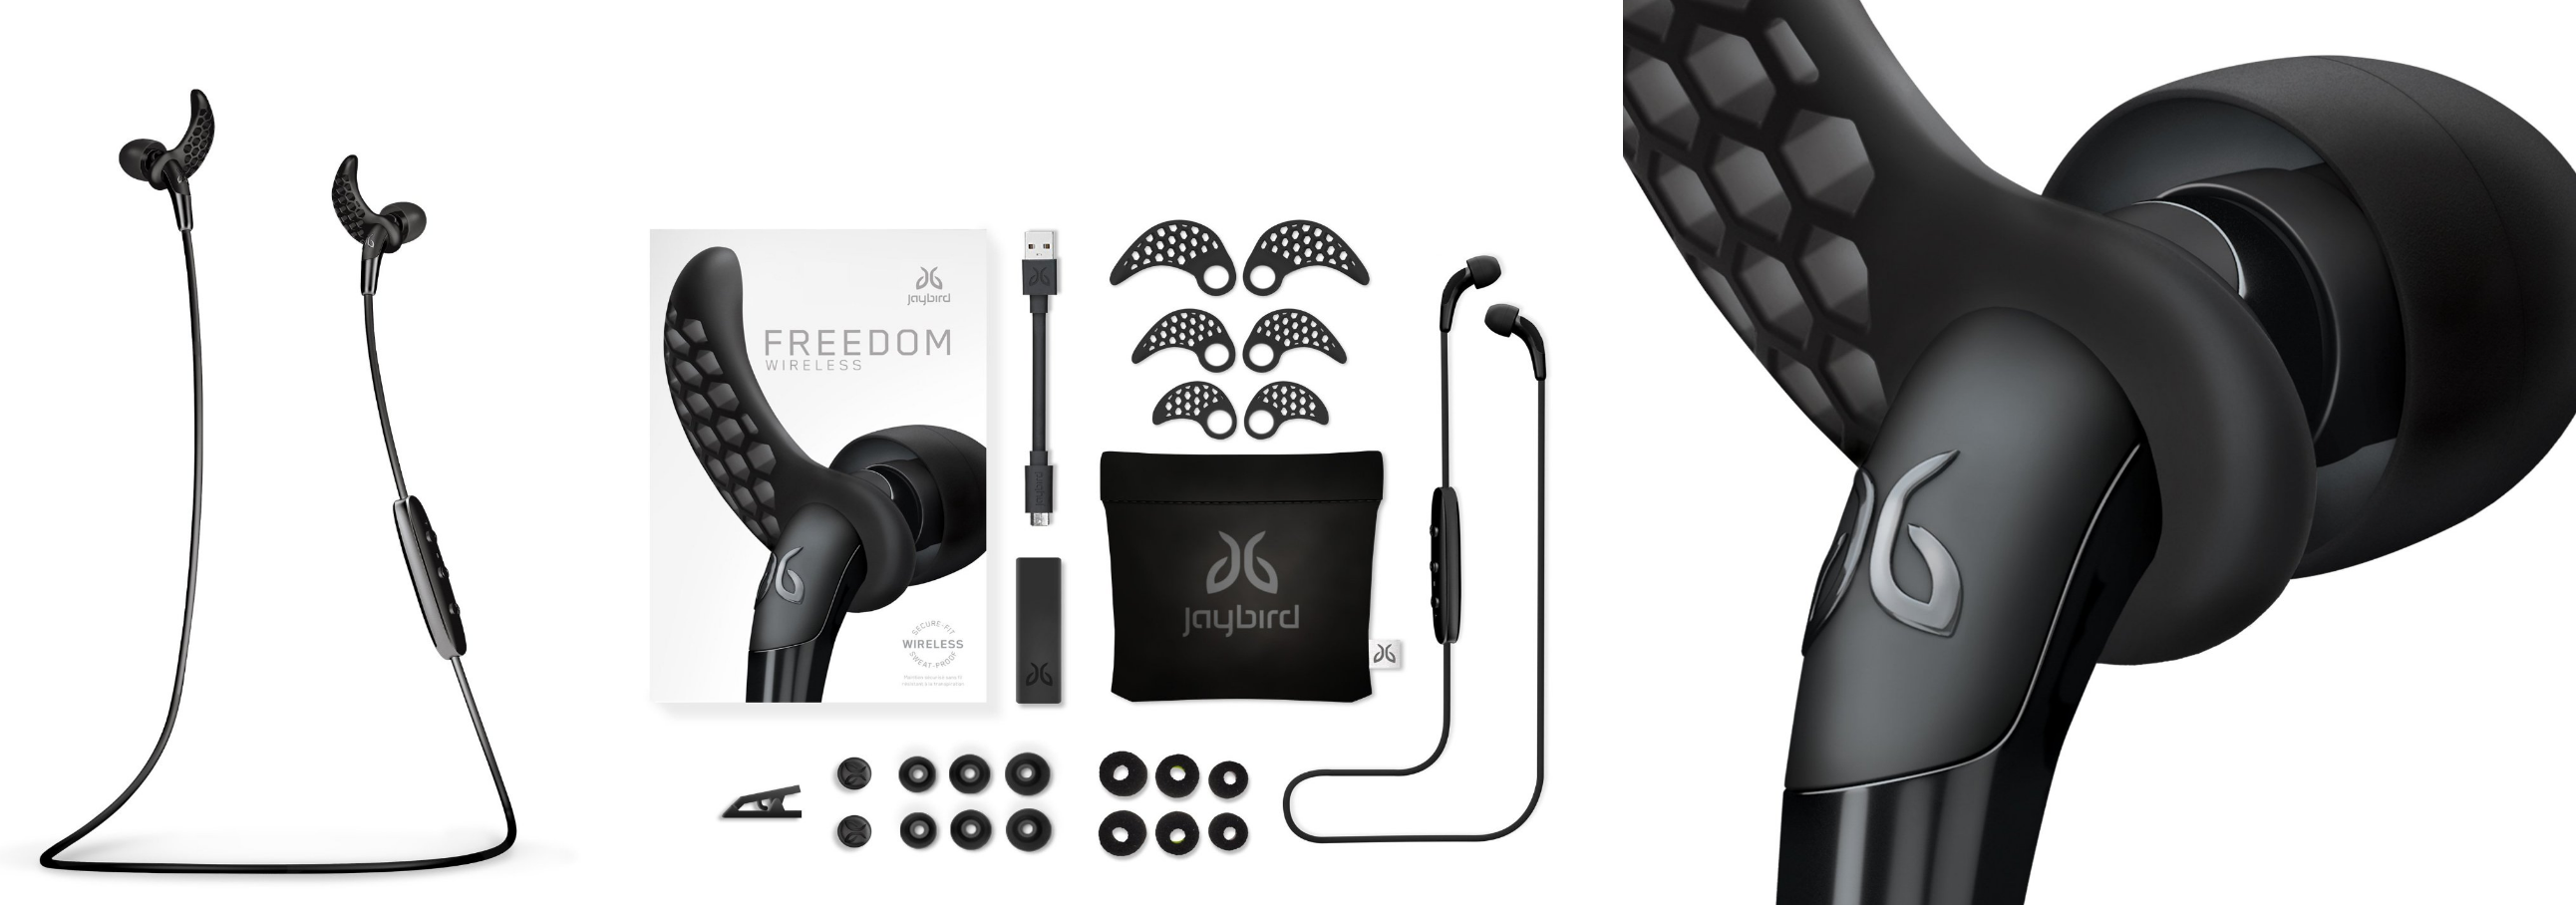 jaybird-freedom-in-ear-headphones